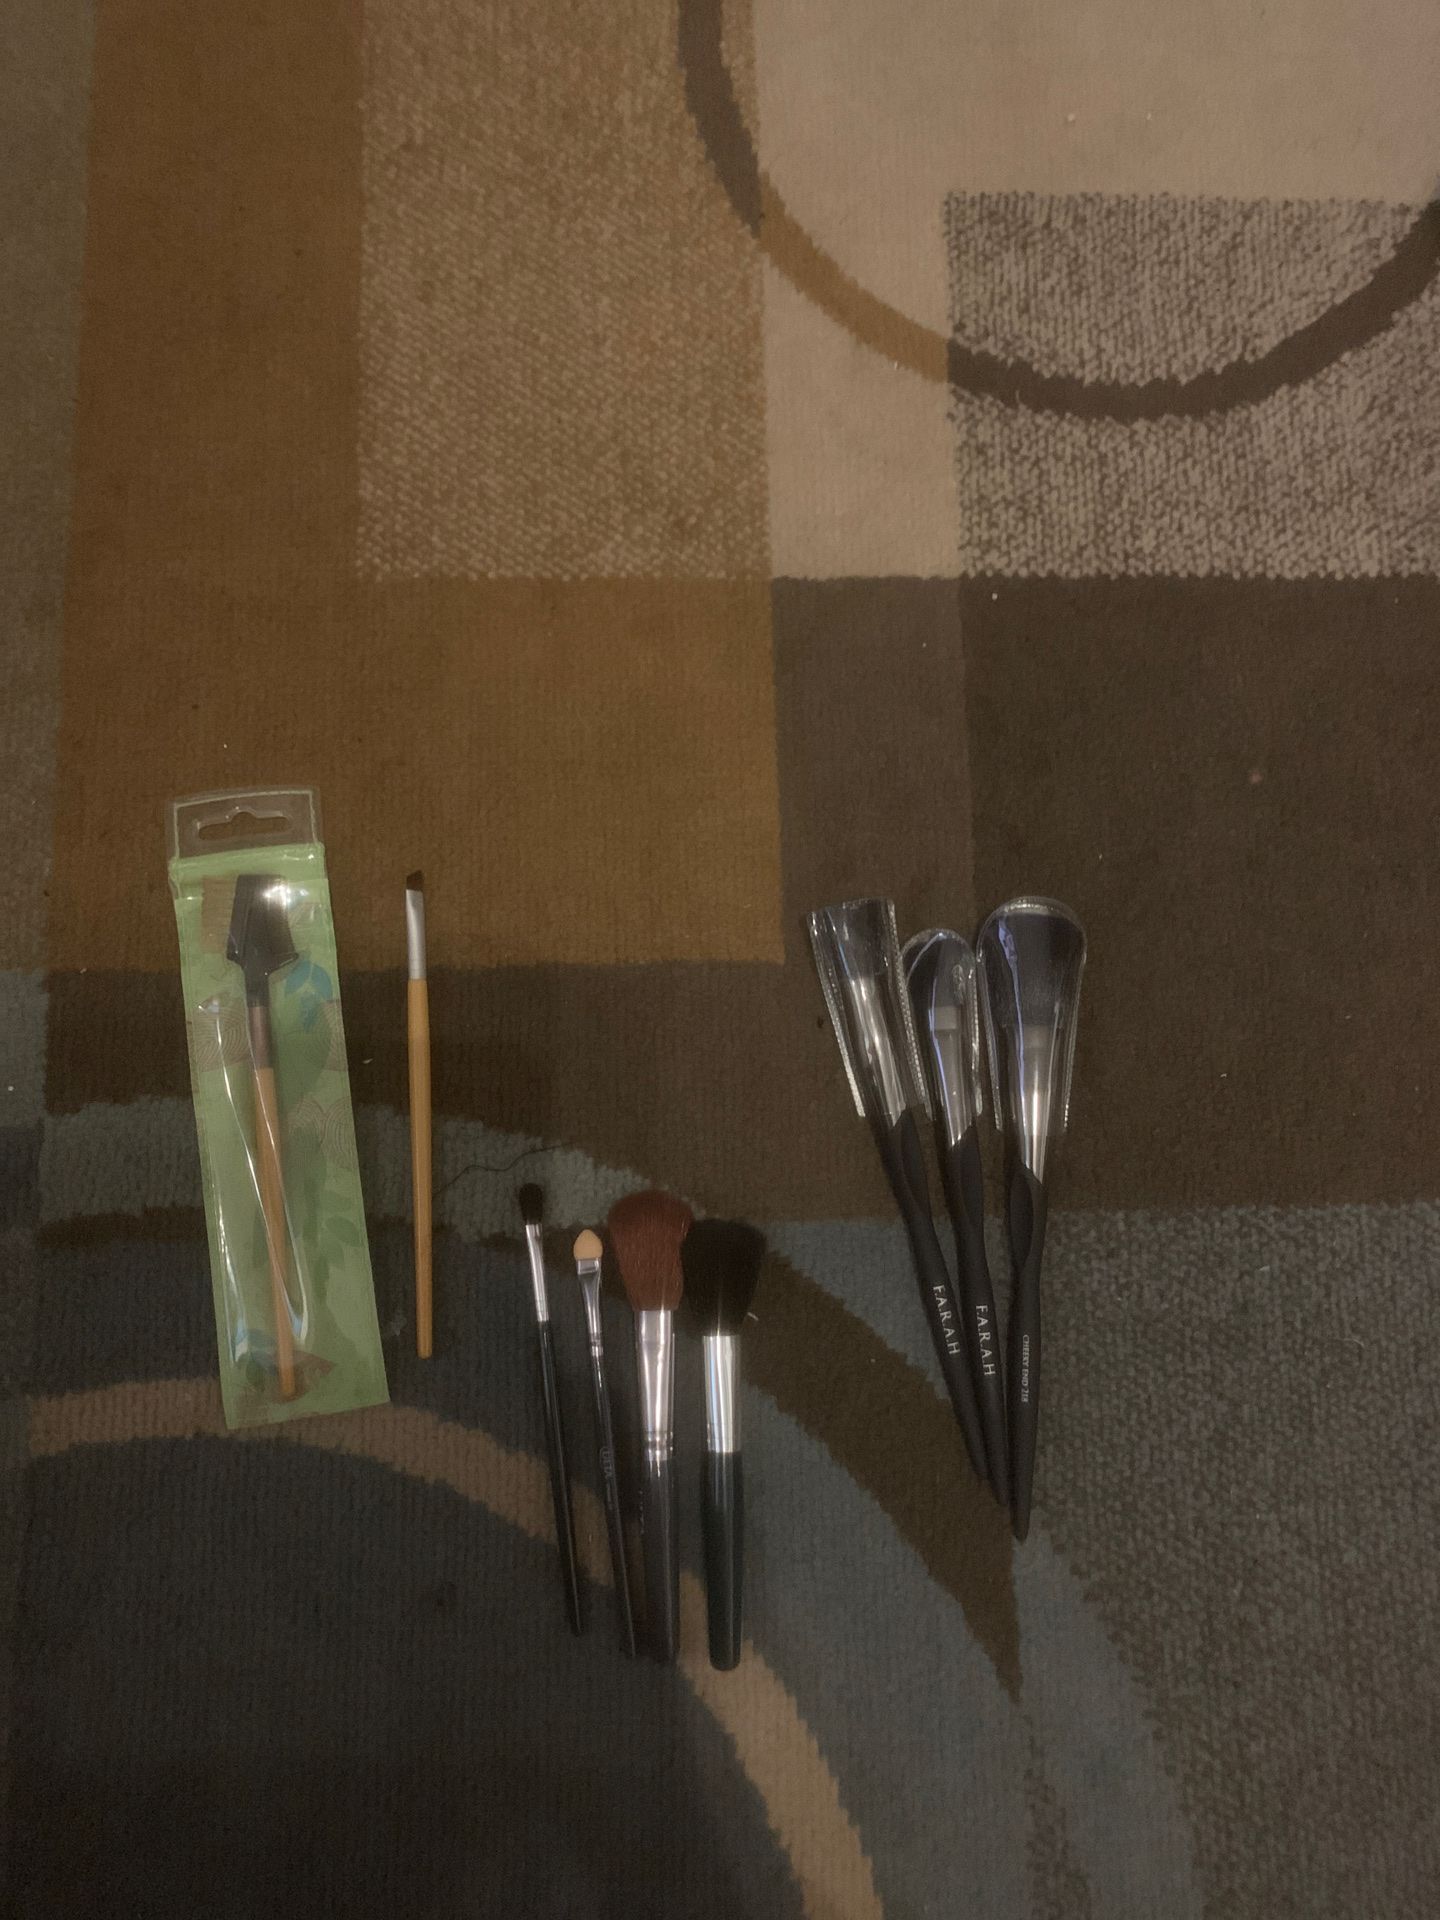 3 sets of makeup brushes